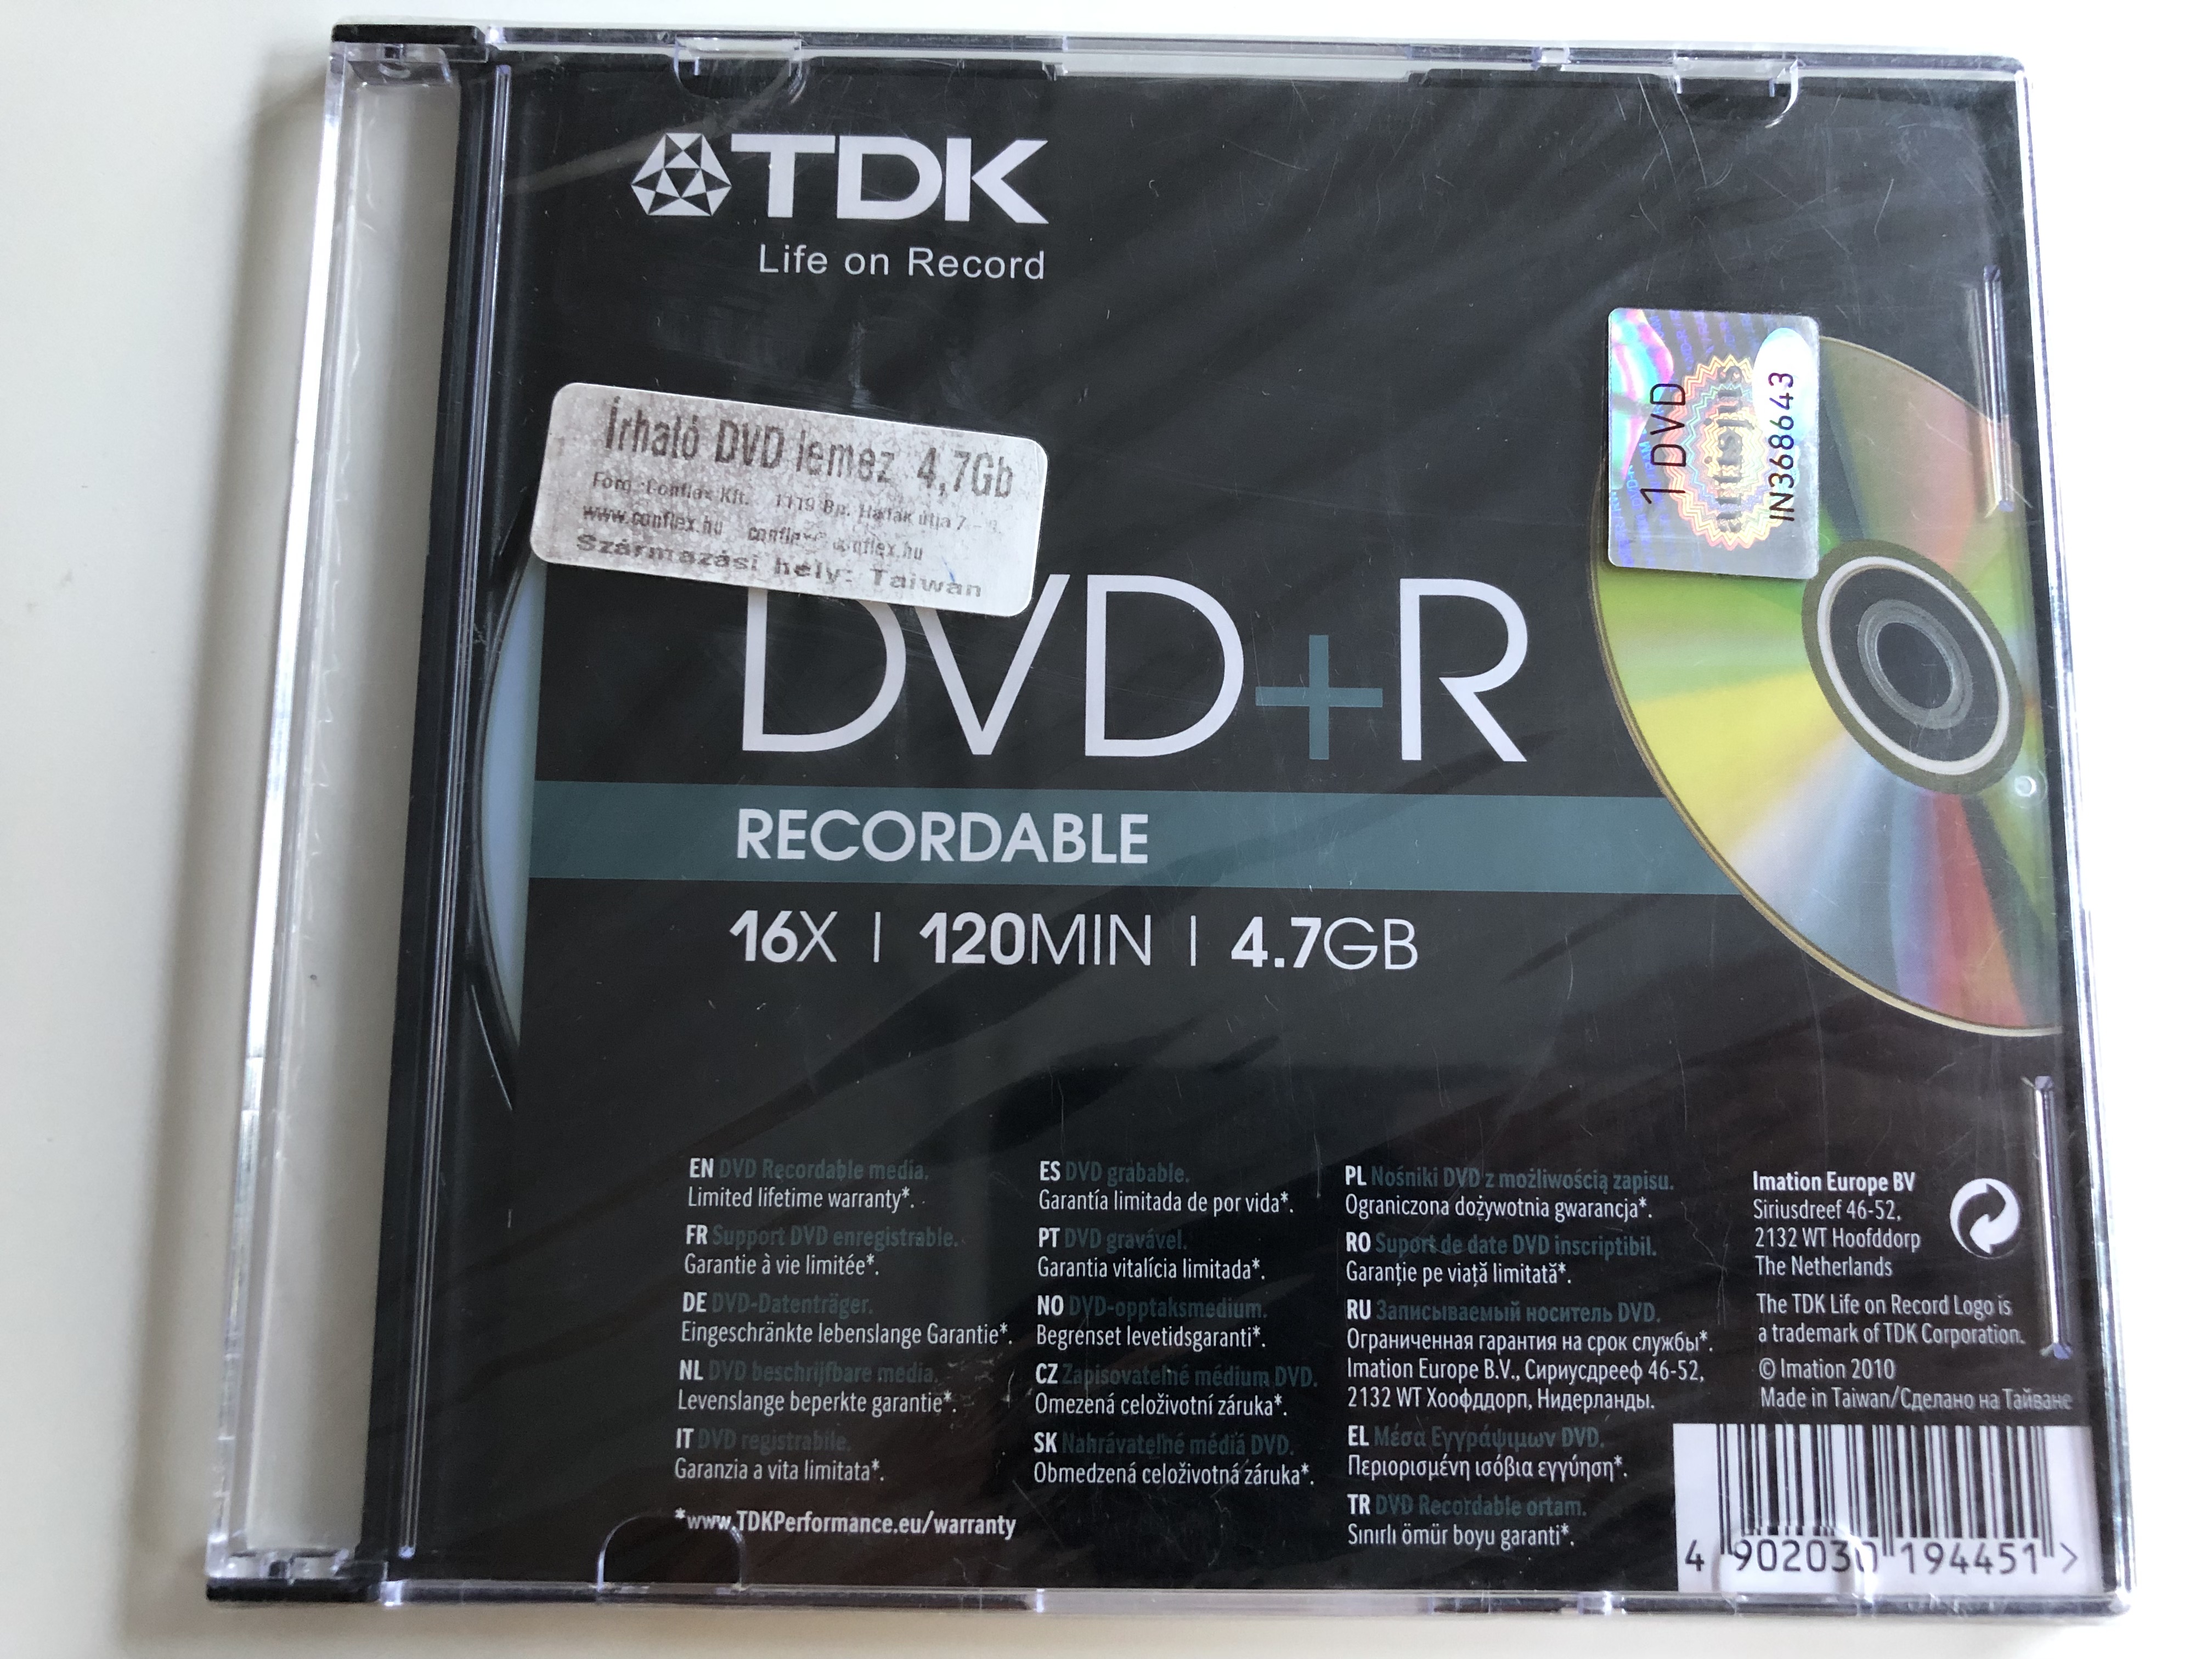 tdk-dvd-r-recordable-16x-speed-4.7-gb-1-.jpg